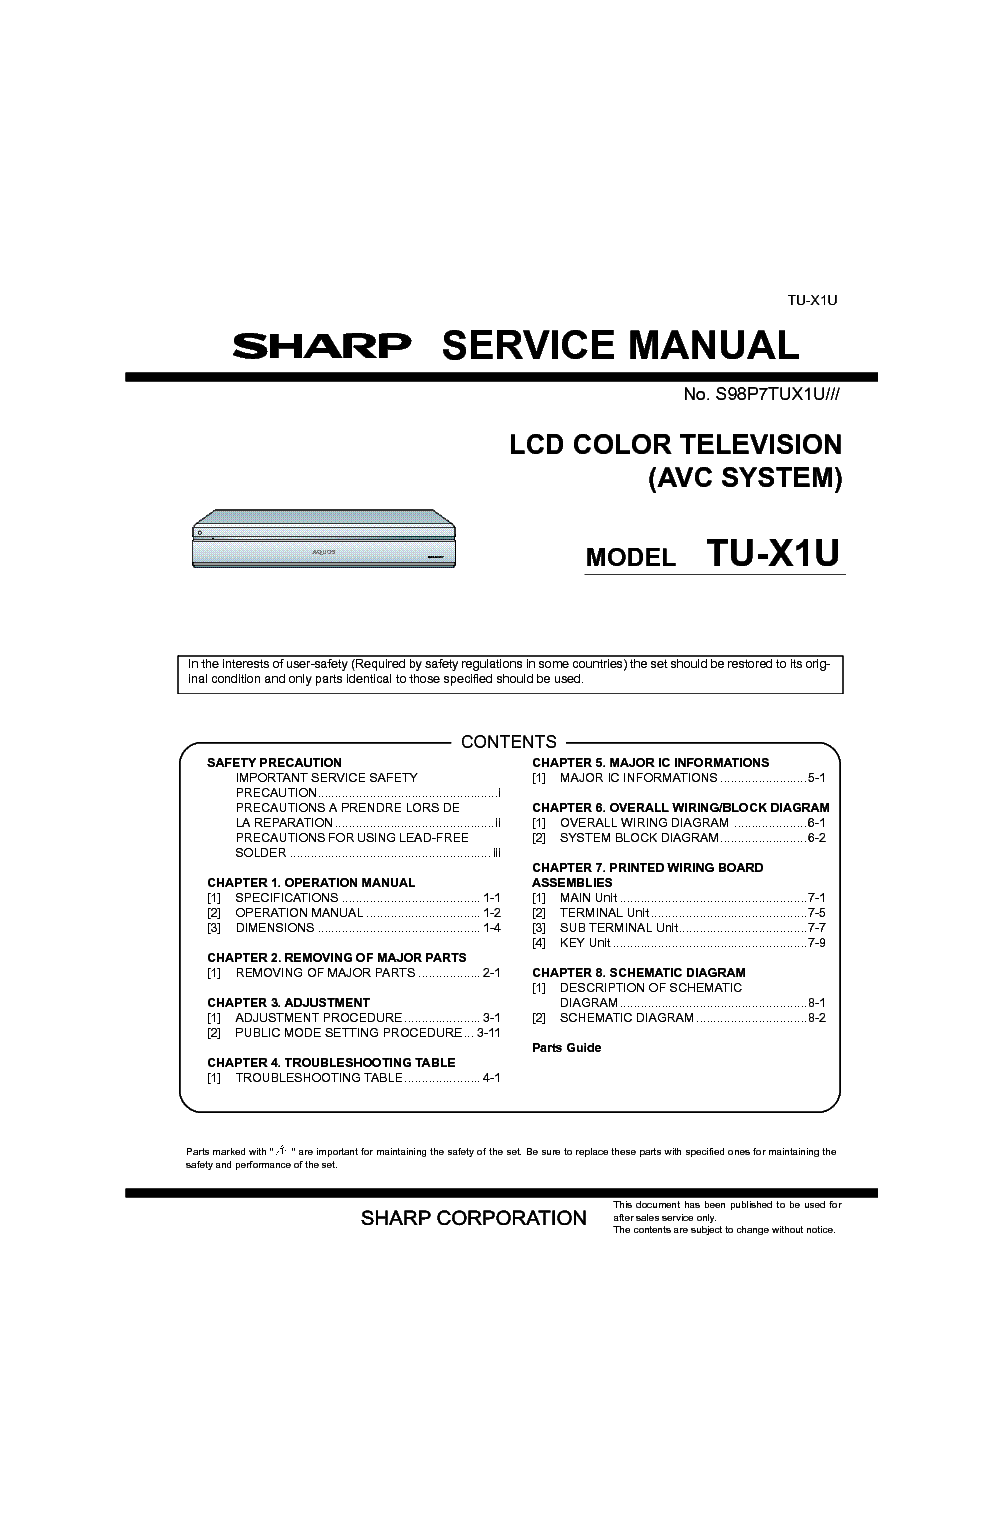 SHARP TU-X1U service manual (1st page)